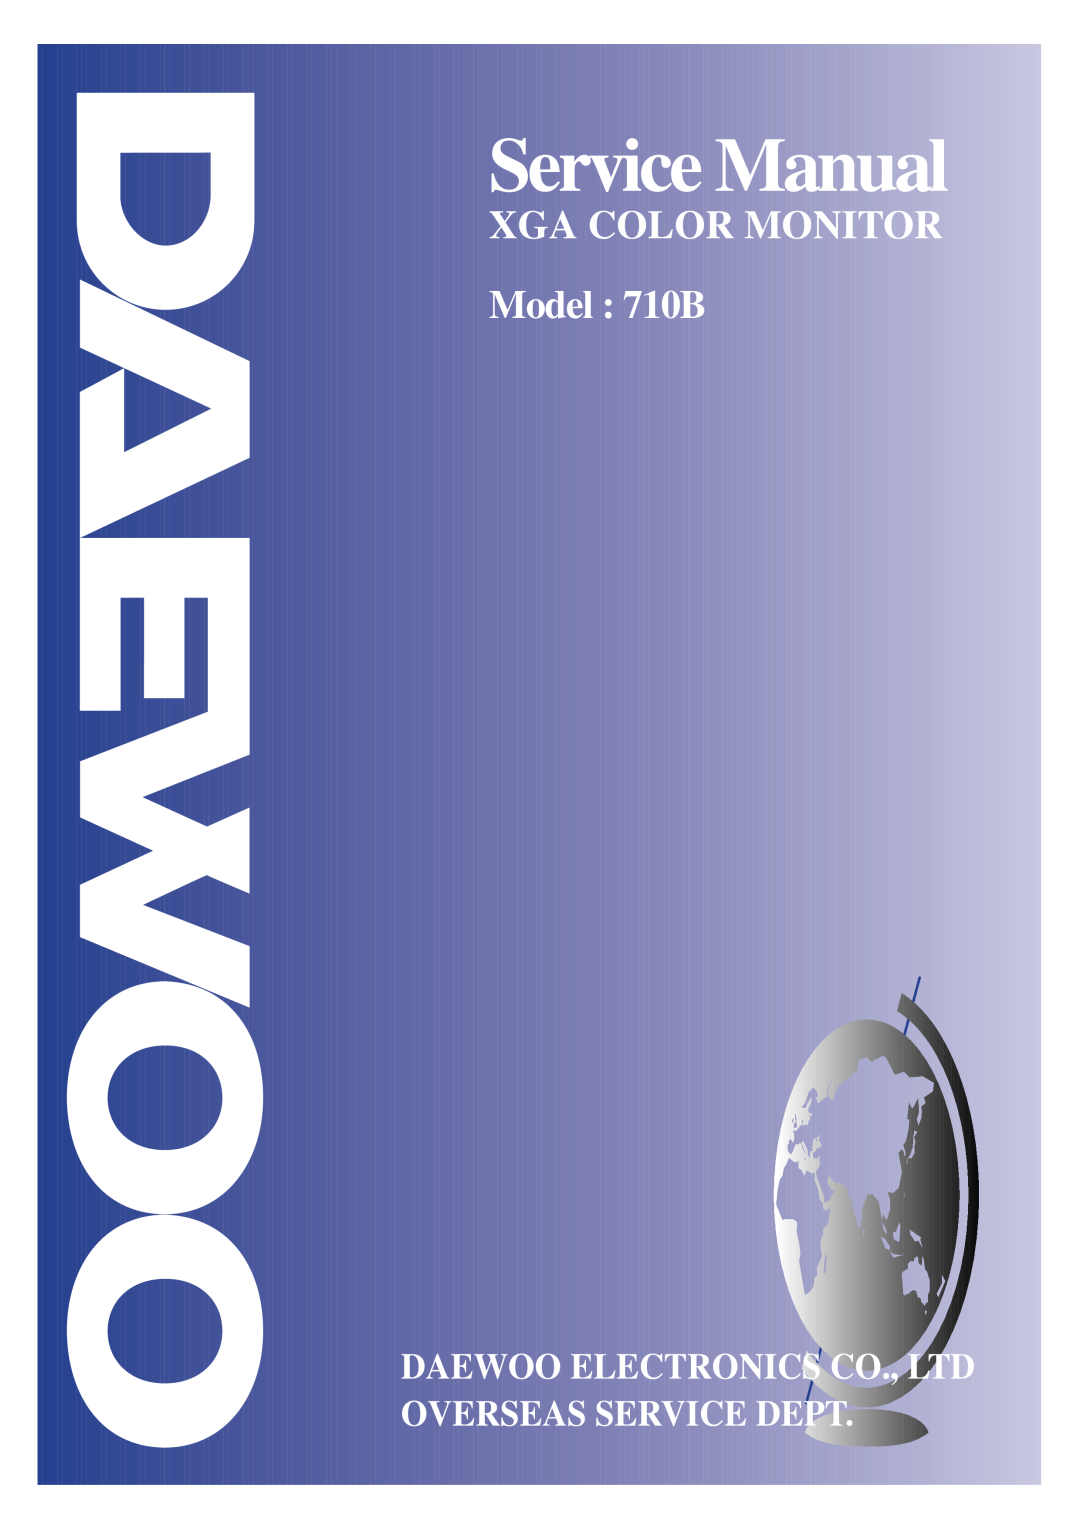 Daewoo service manual Service Manual, XGA COLOR MONITOR Model 710B 